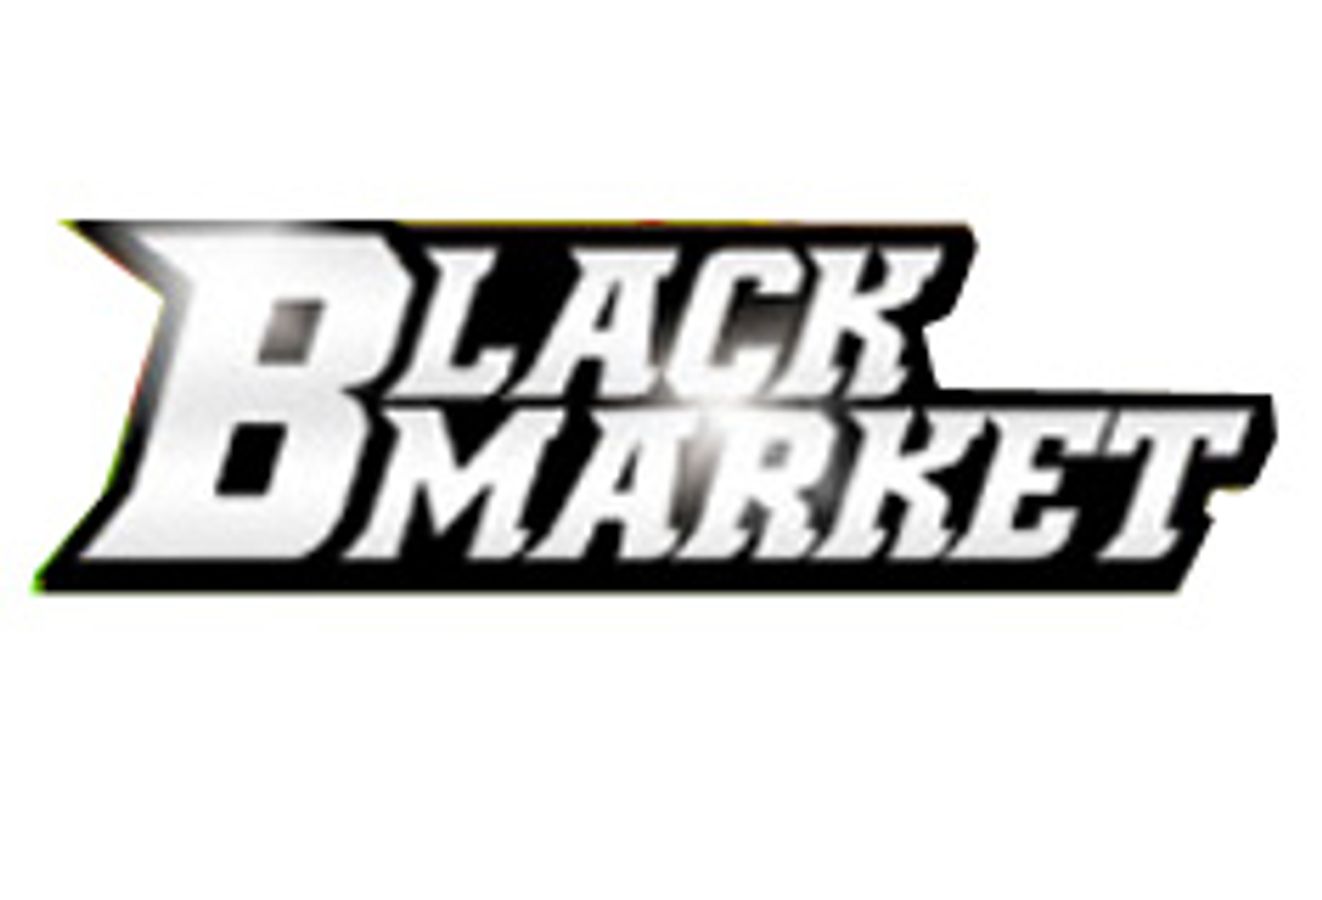 Black Market Entertainment